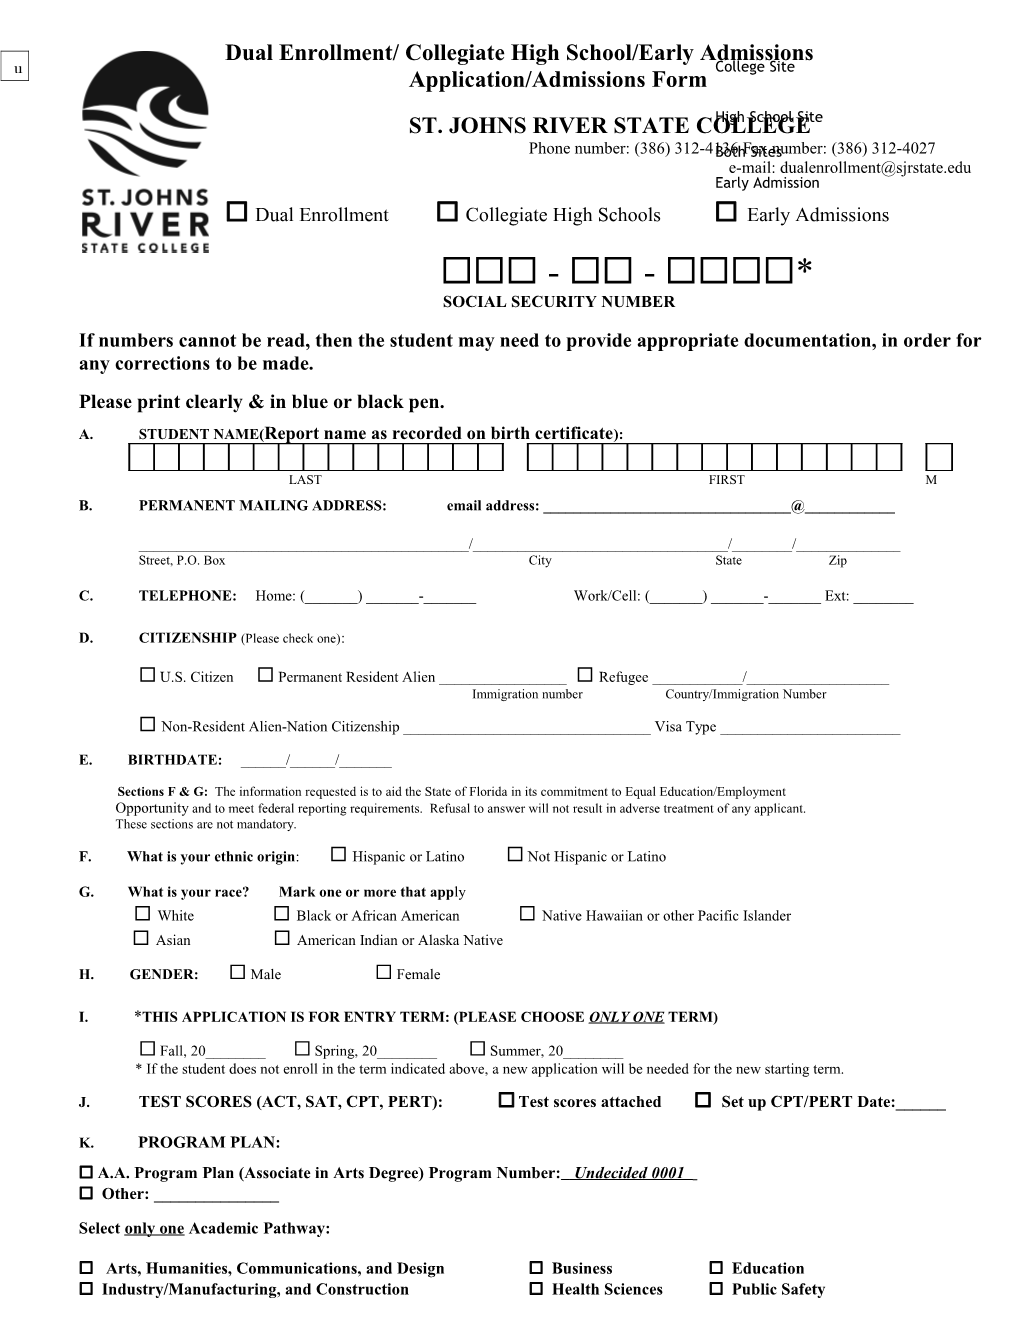 Dual Enrollment Admissions Form